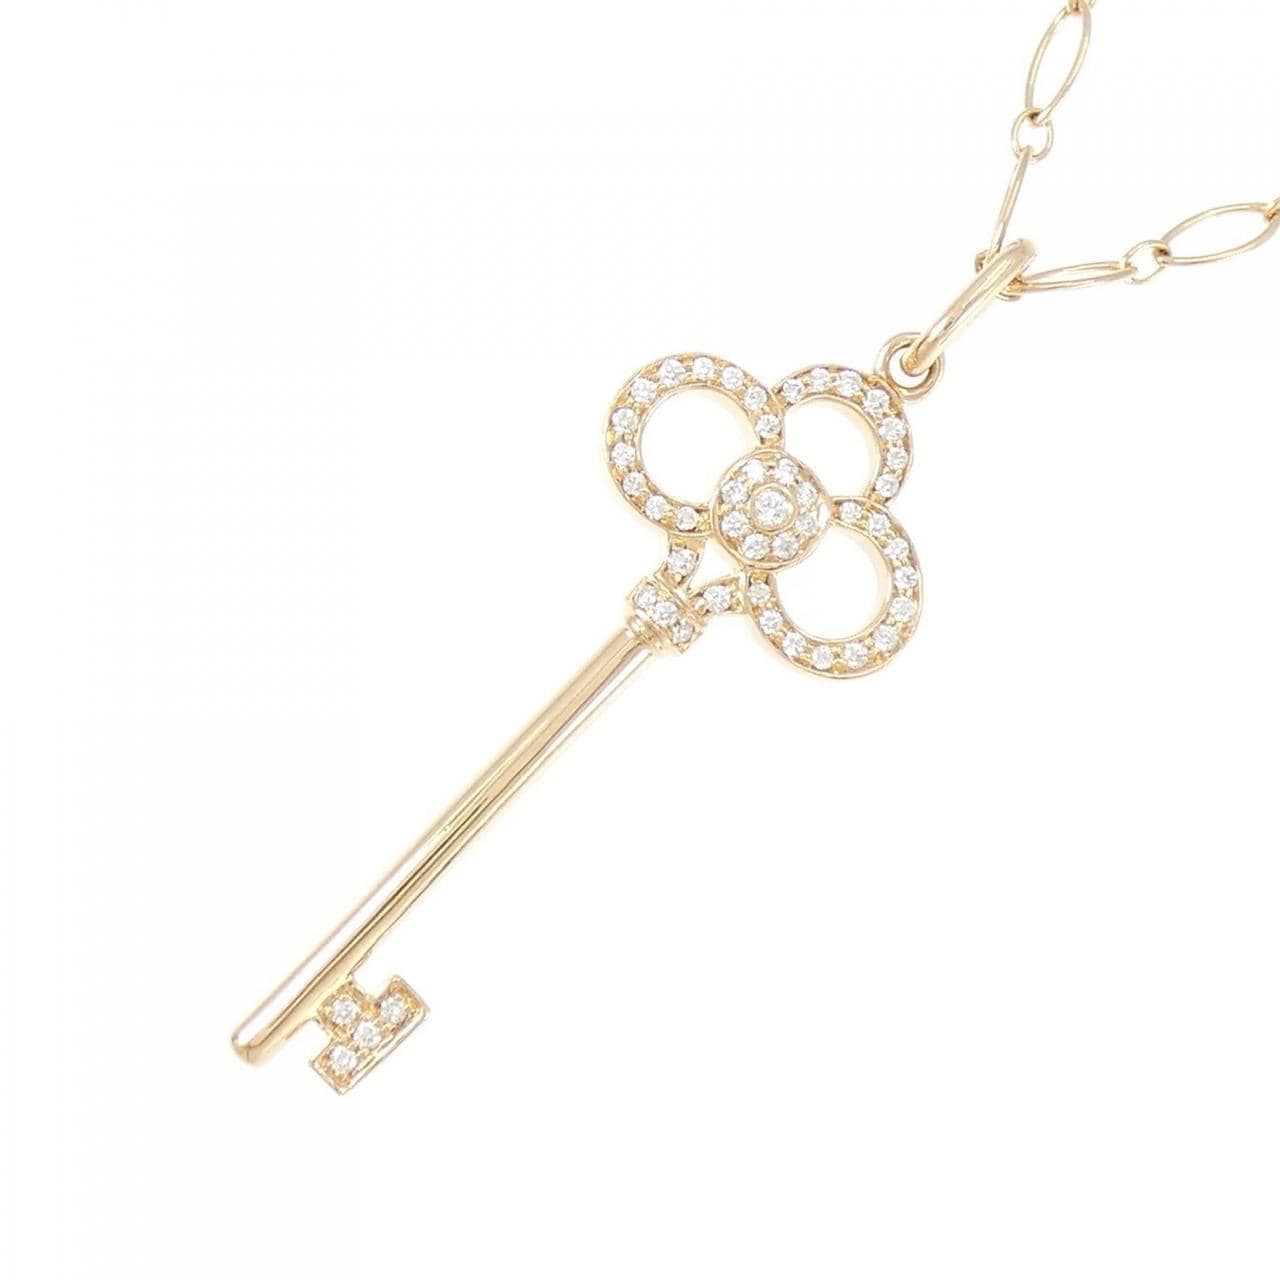 TIFFANY crown key necklace